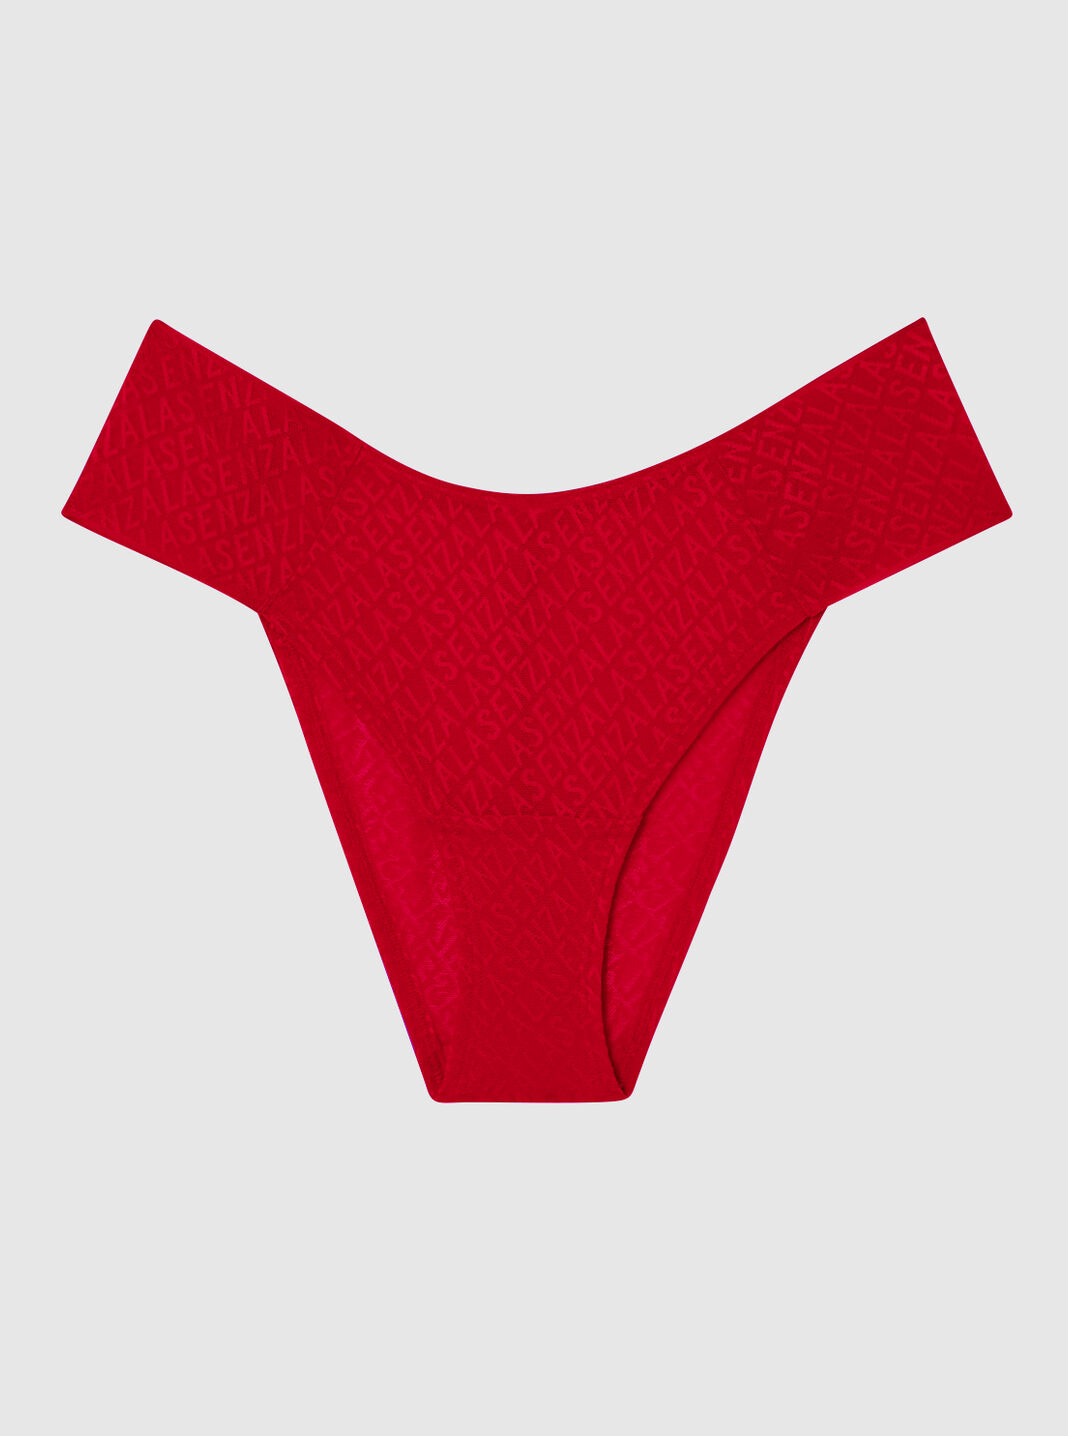 5Pcs/lot Panties Women Underwear Chinese Red Cotton Briefs Seamless  Calcinhas Print Underpants Girls Panty Ladies Sexy Lingeries